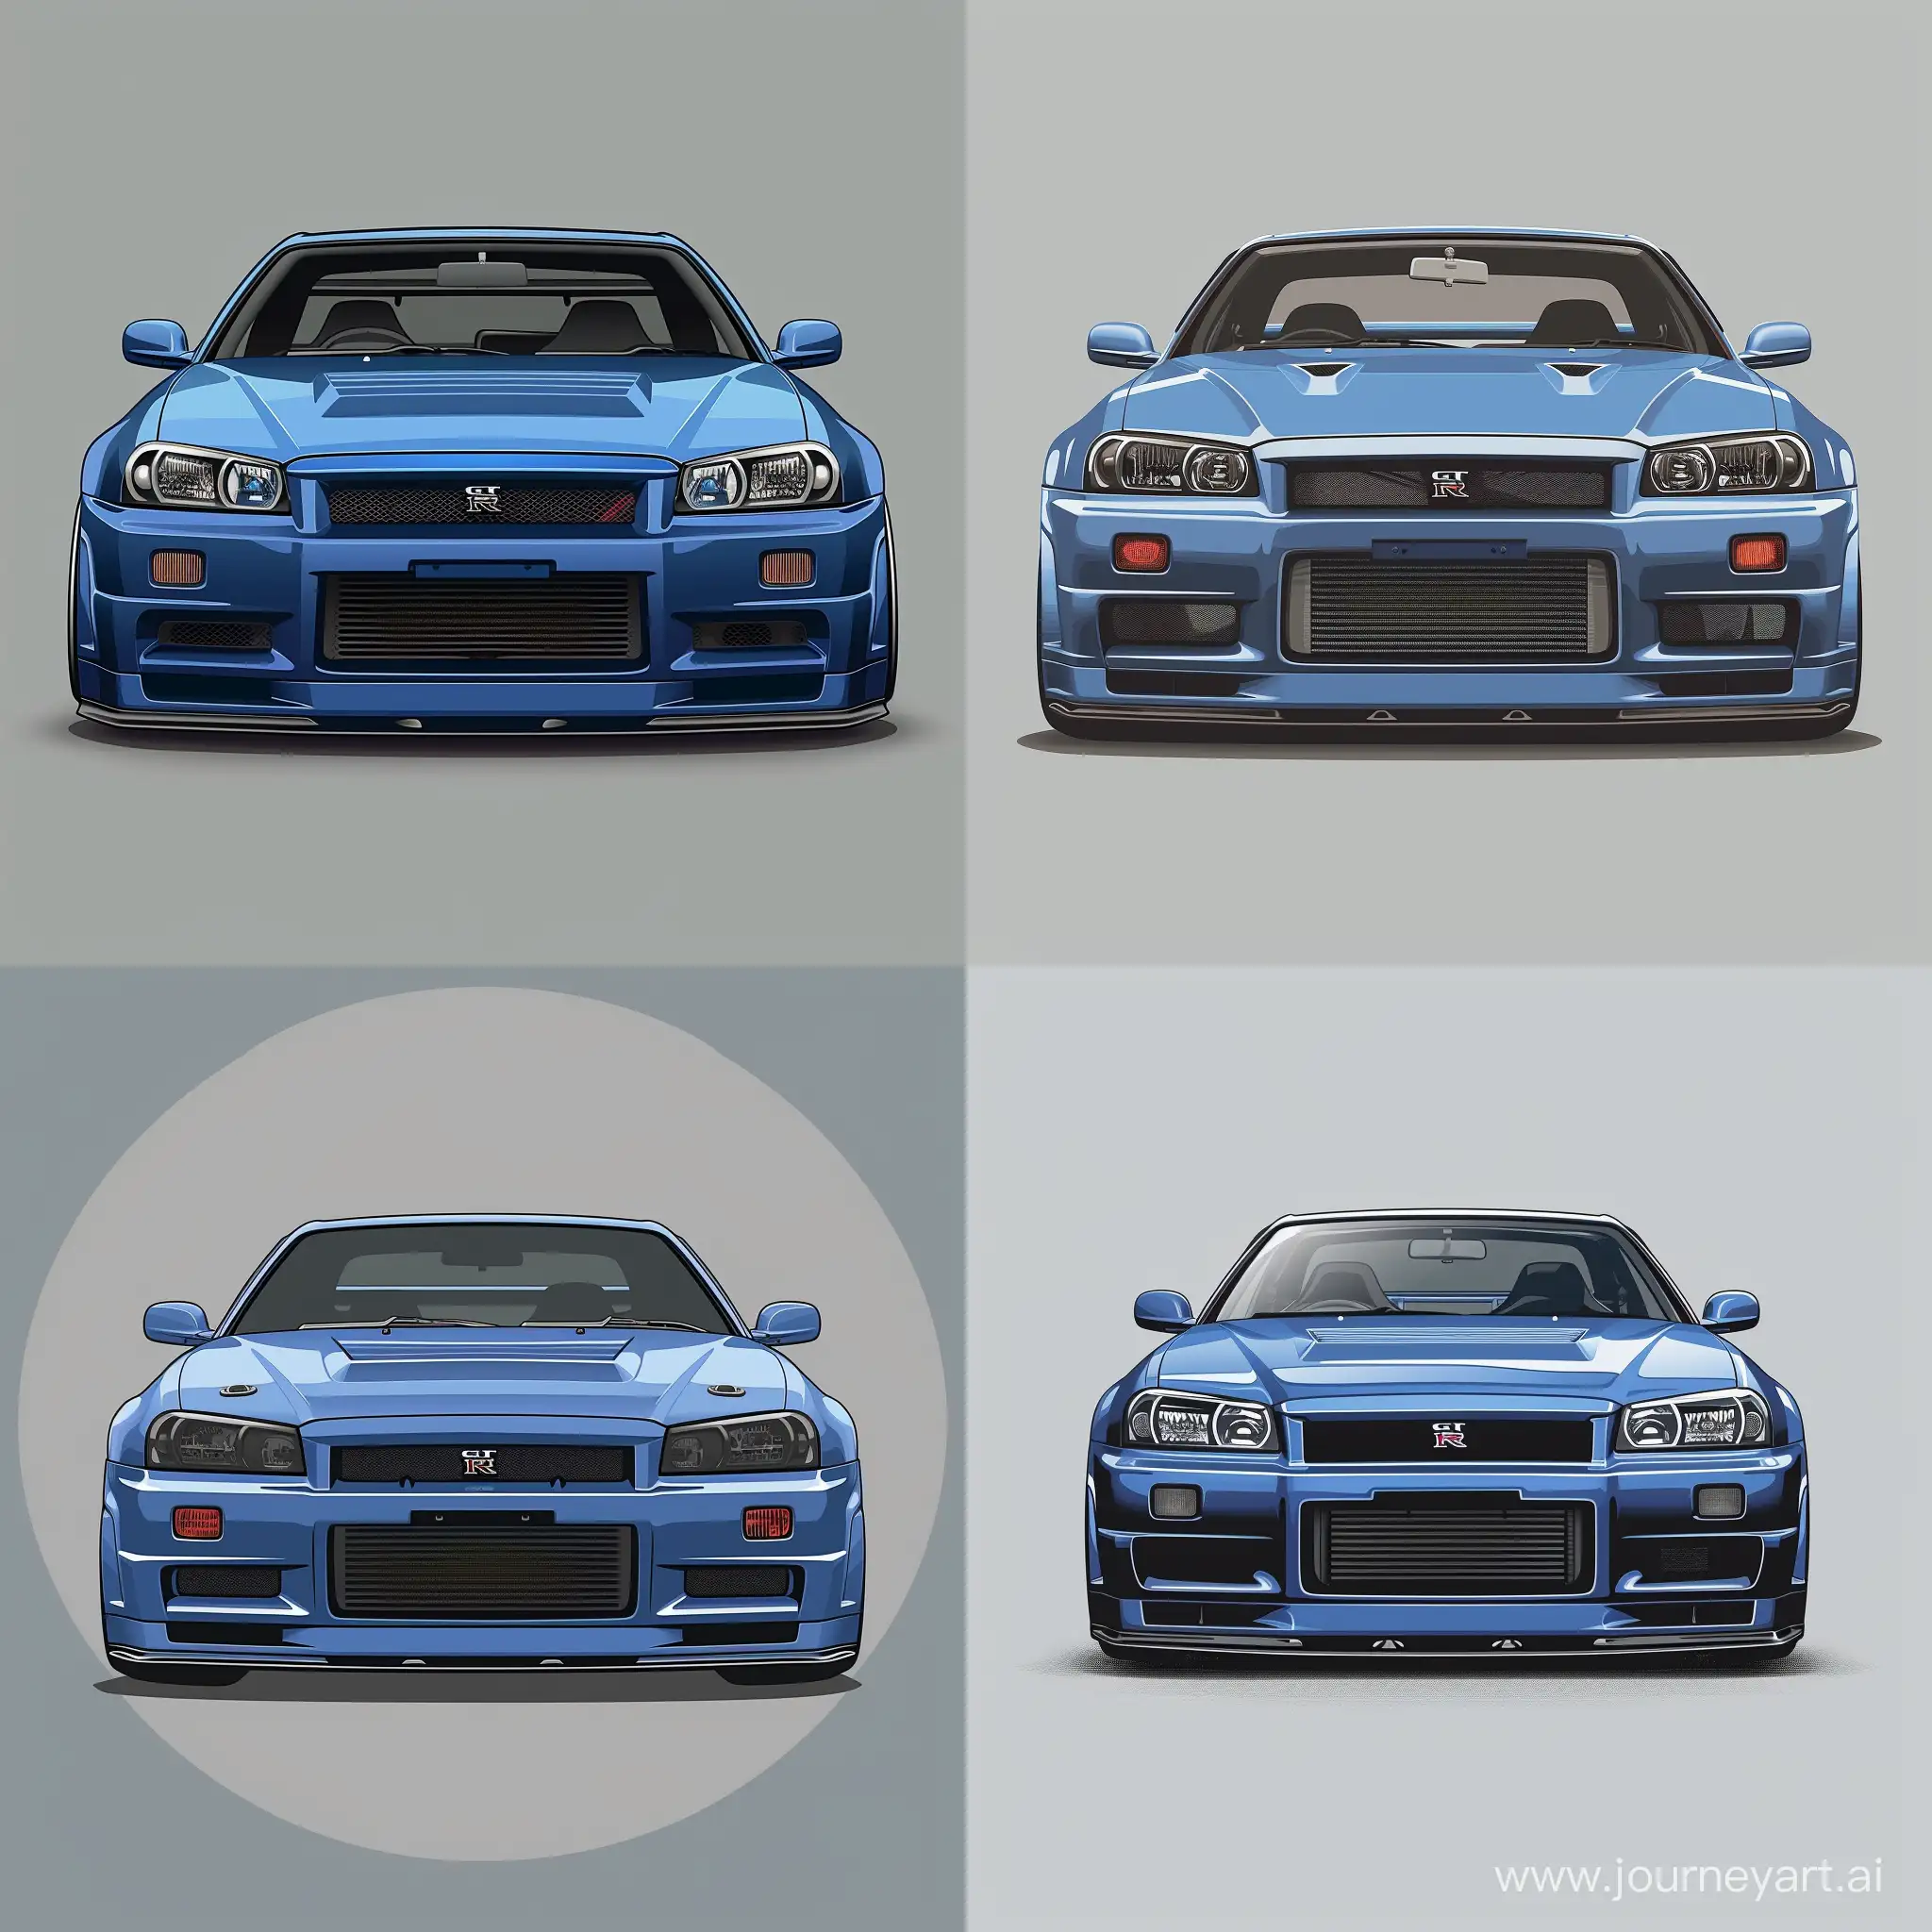 Nissan-Skyline-GTR-R34-Minimalist-2D-Illustration-with-Blue-Body-on-Simple-Gray-Background